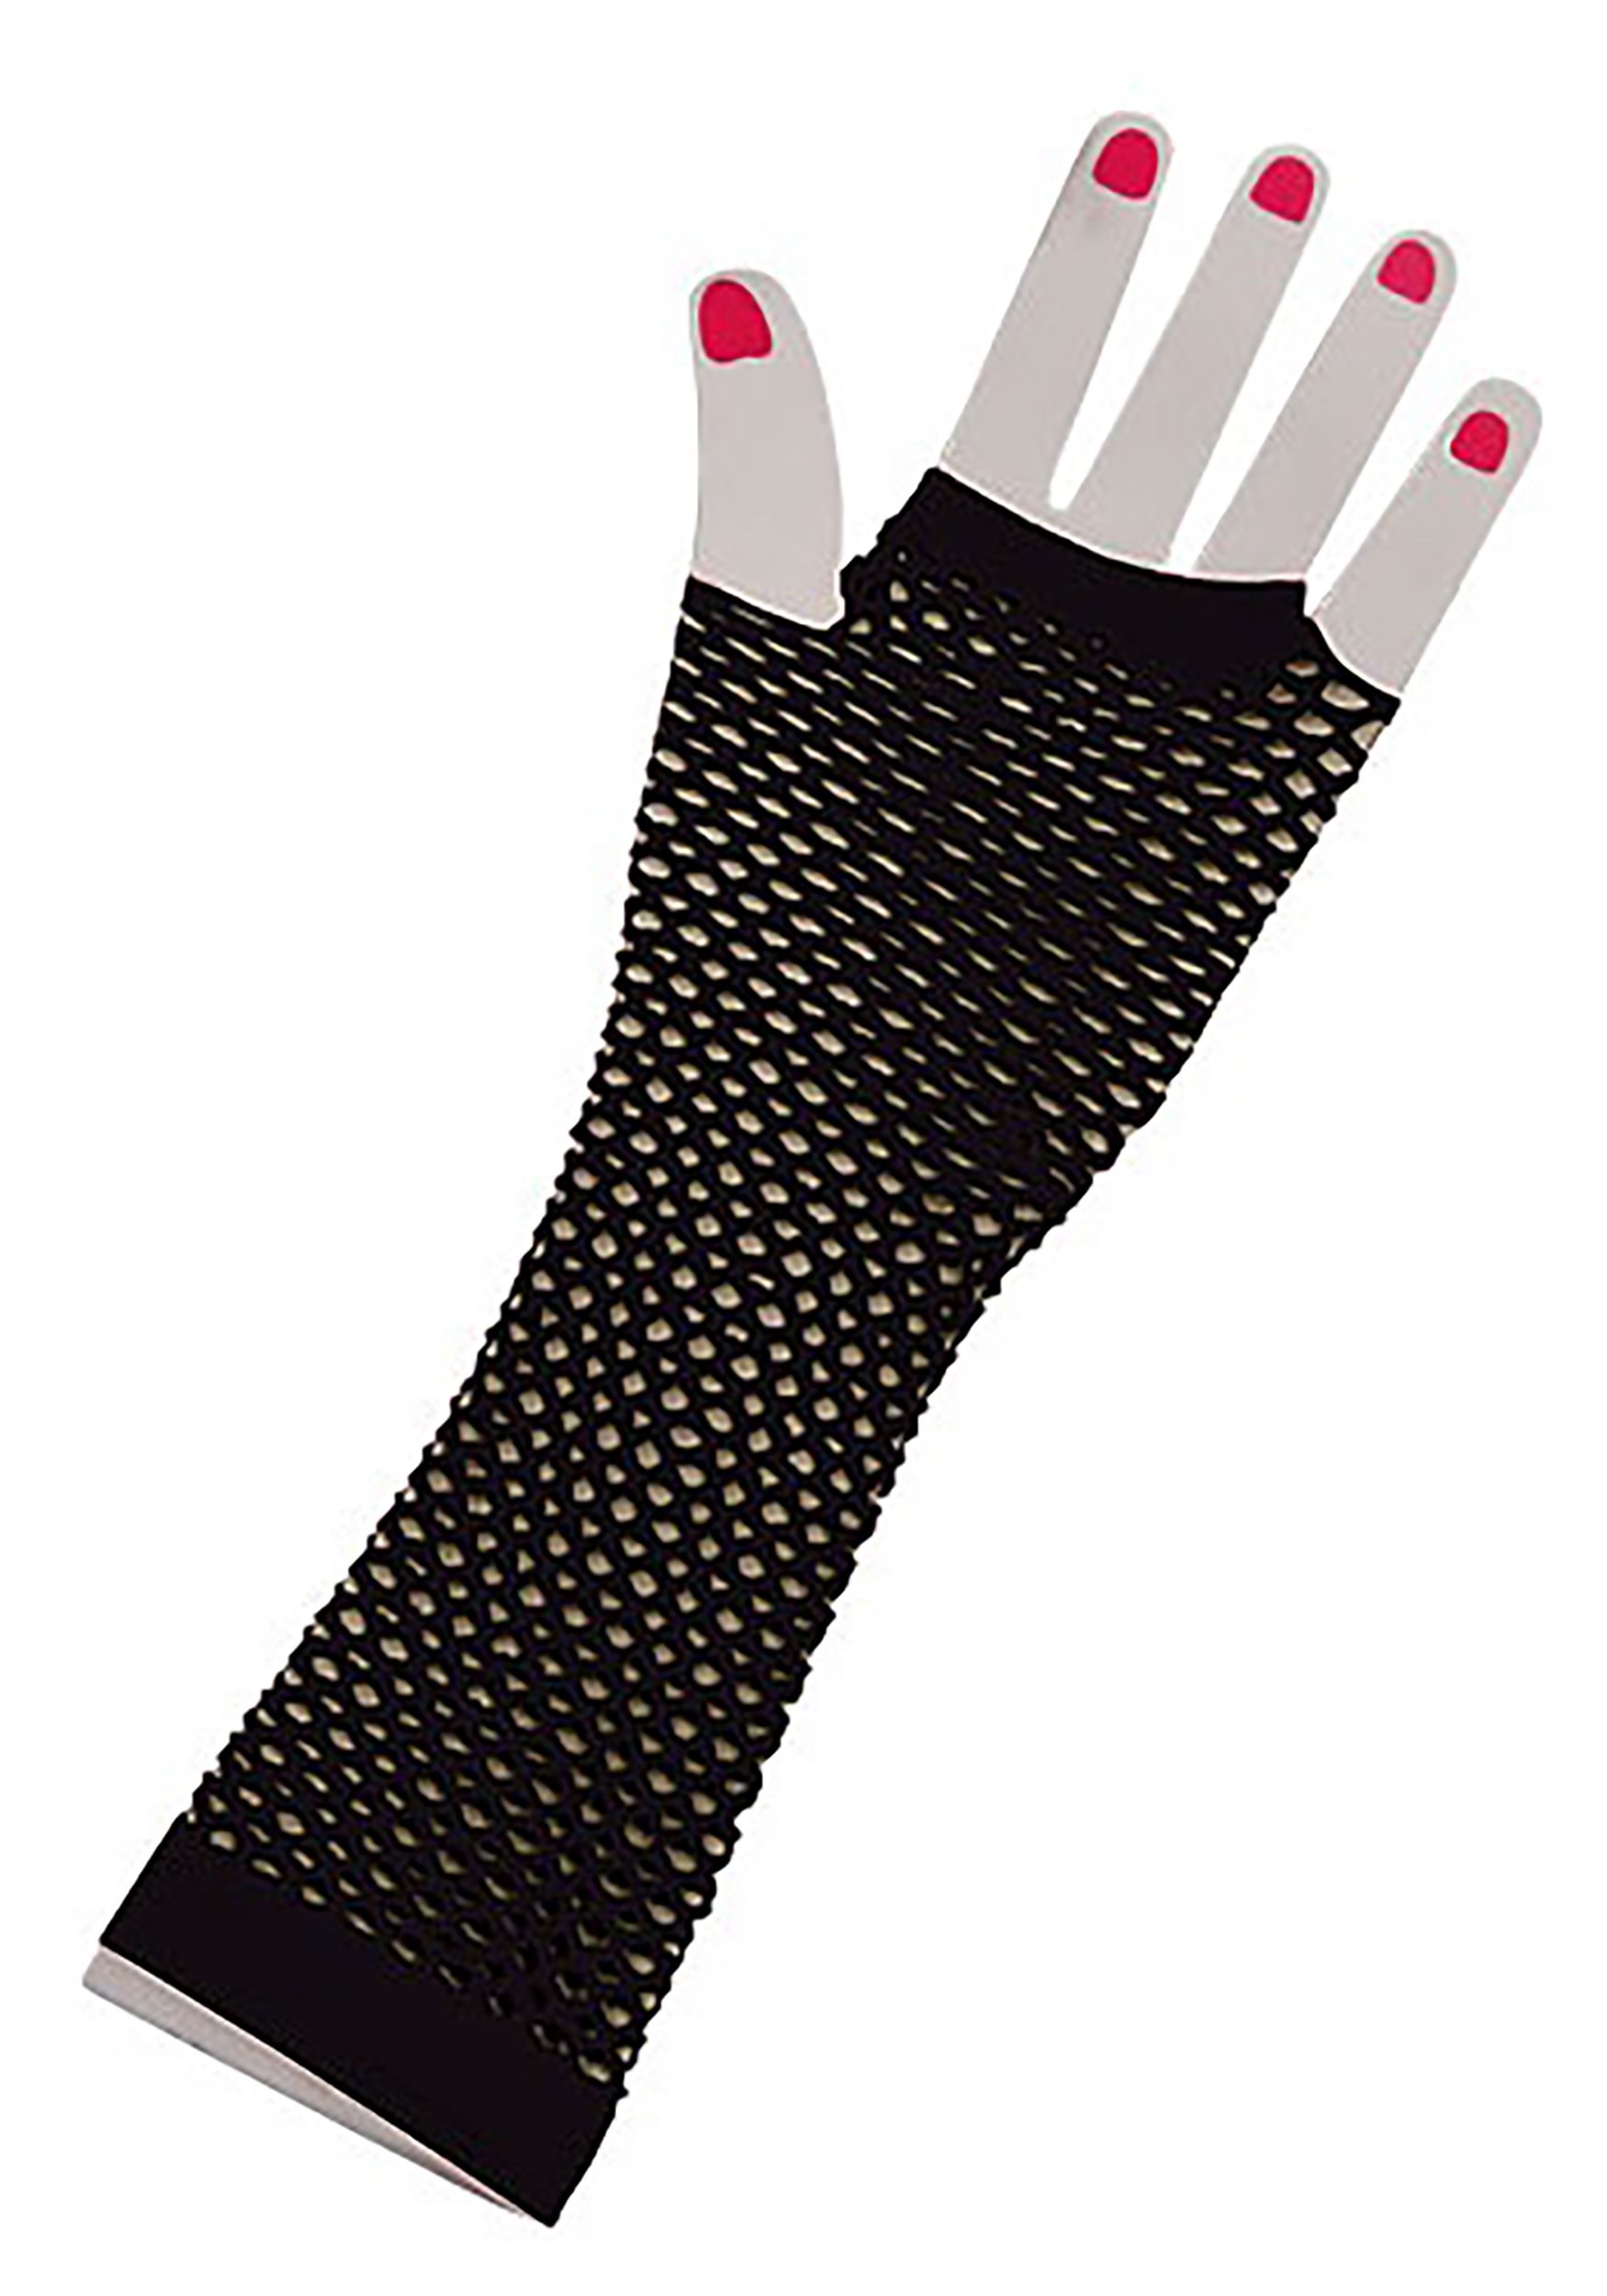 https://images.halloweencostumes.com/products/3958/1-1/black-fishnet-fingerless-gloves.jpg